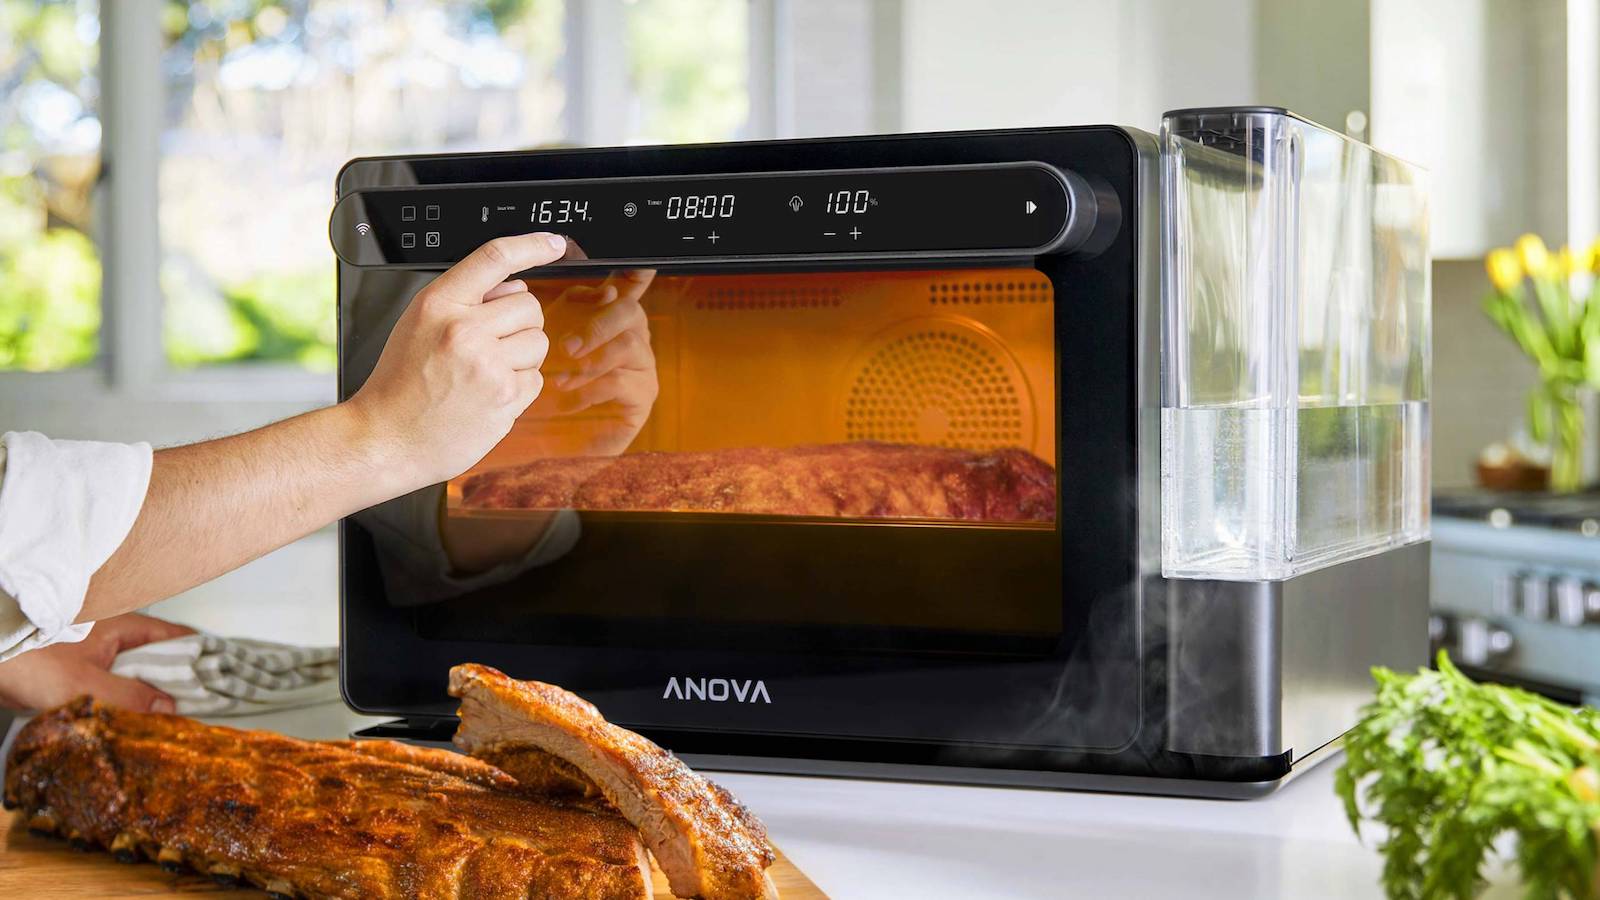 https://thegadgetflow.com/wp-content/uploads/2020/08/Anova-Precision-Oven-combi-cooker-01.jpg